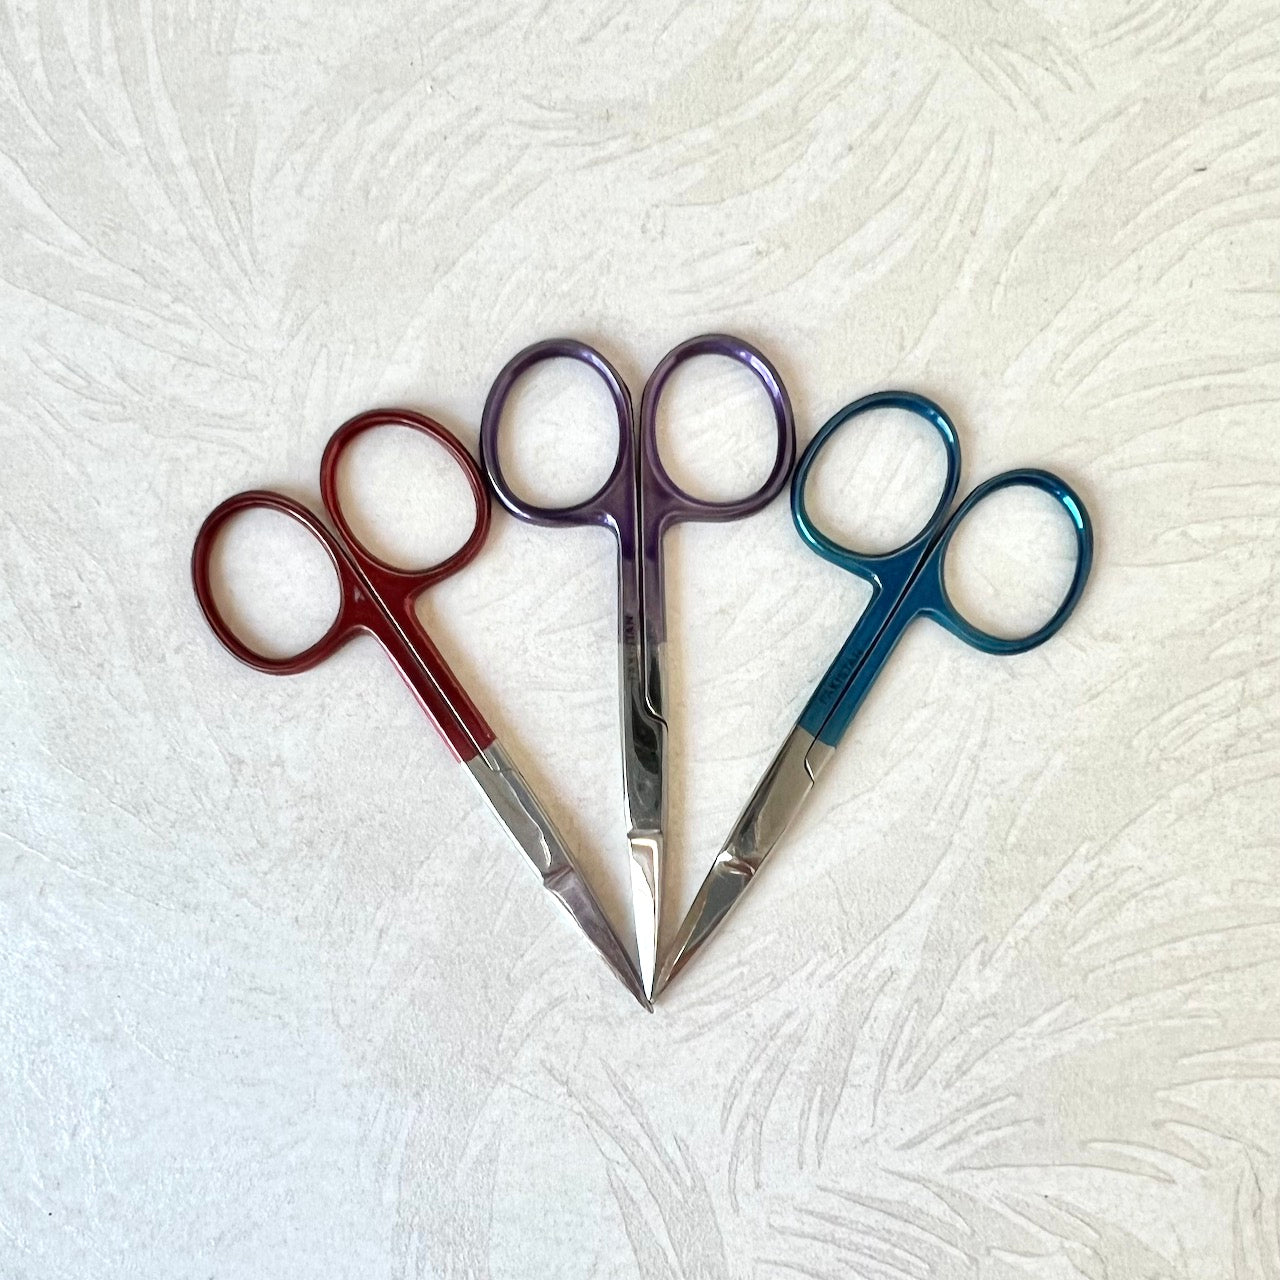 Small Embroidery Scissors